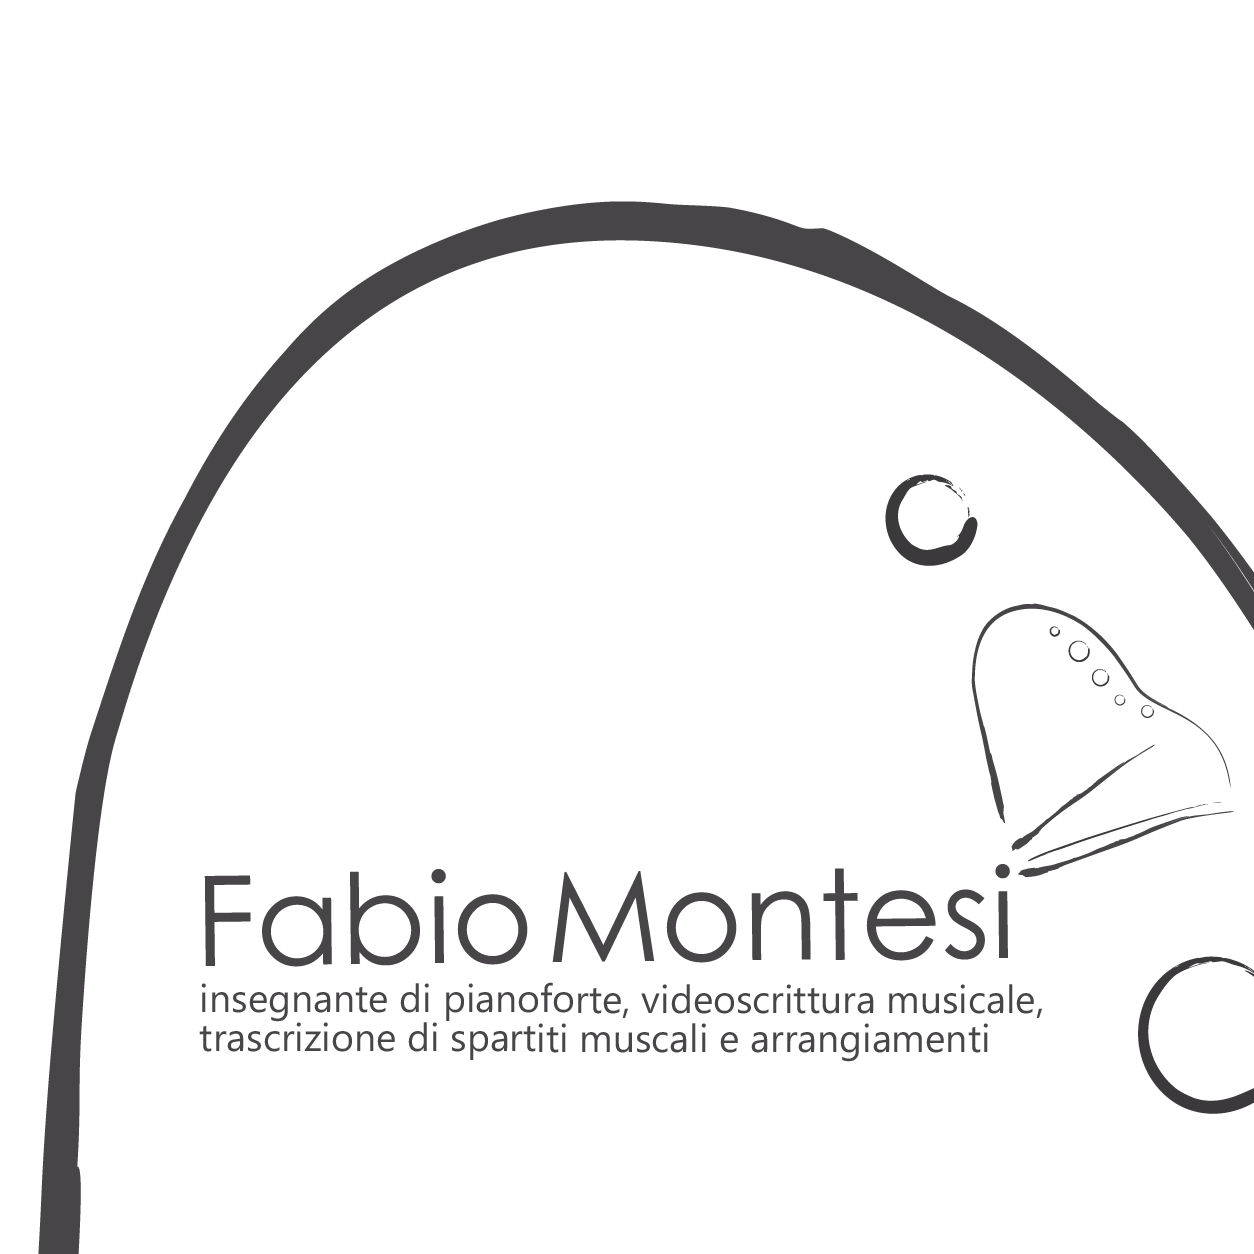 Fabio Montesi